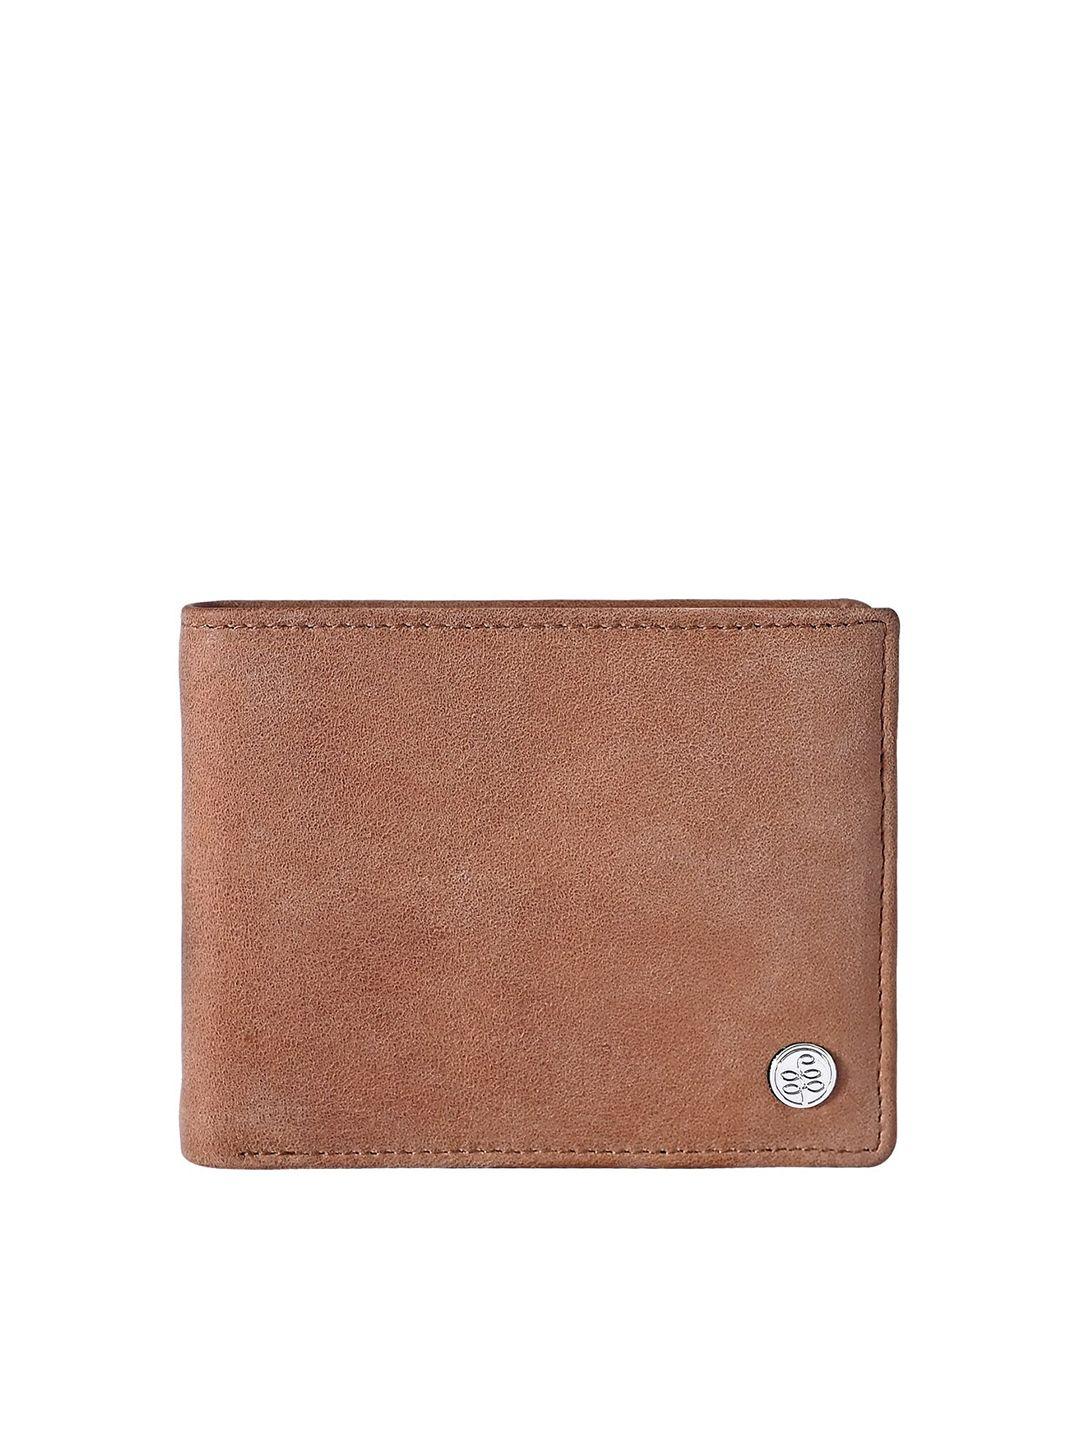 eske men textured leather rfid water resistant two fold wallet